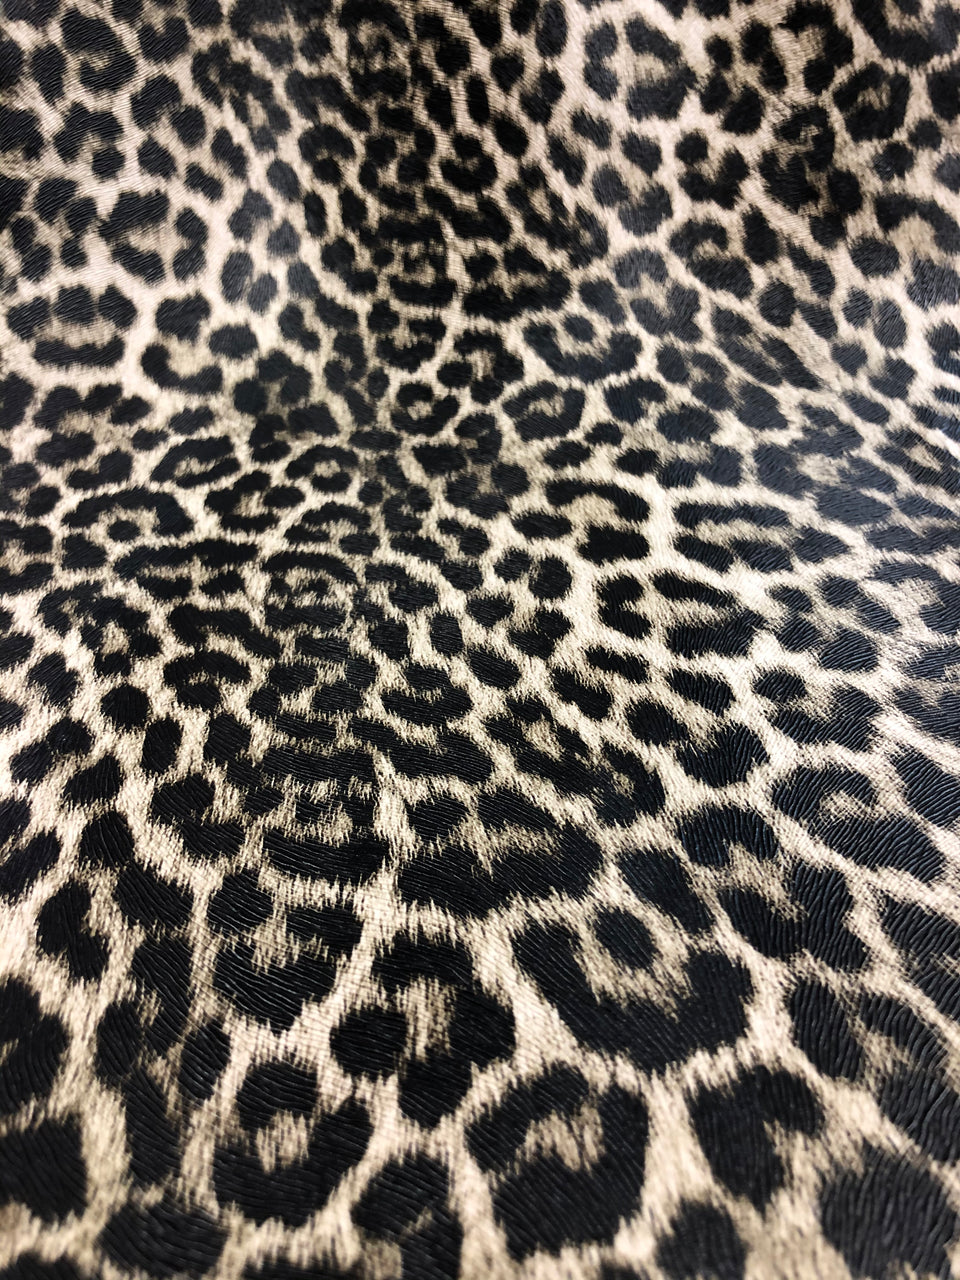 Leopard Lt. - Pleather